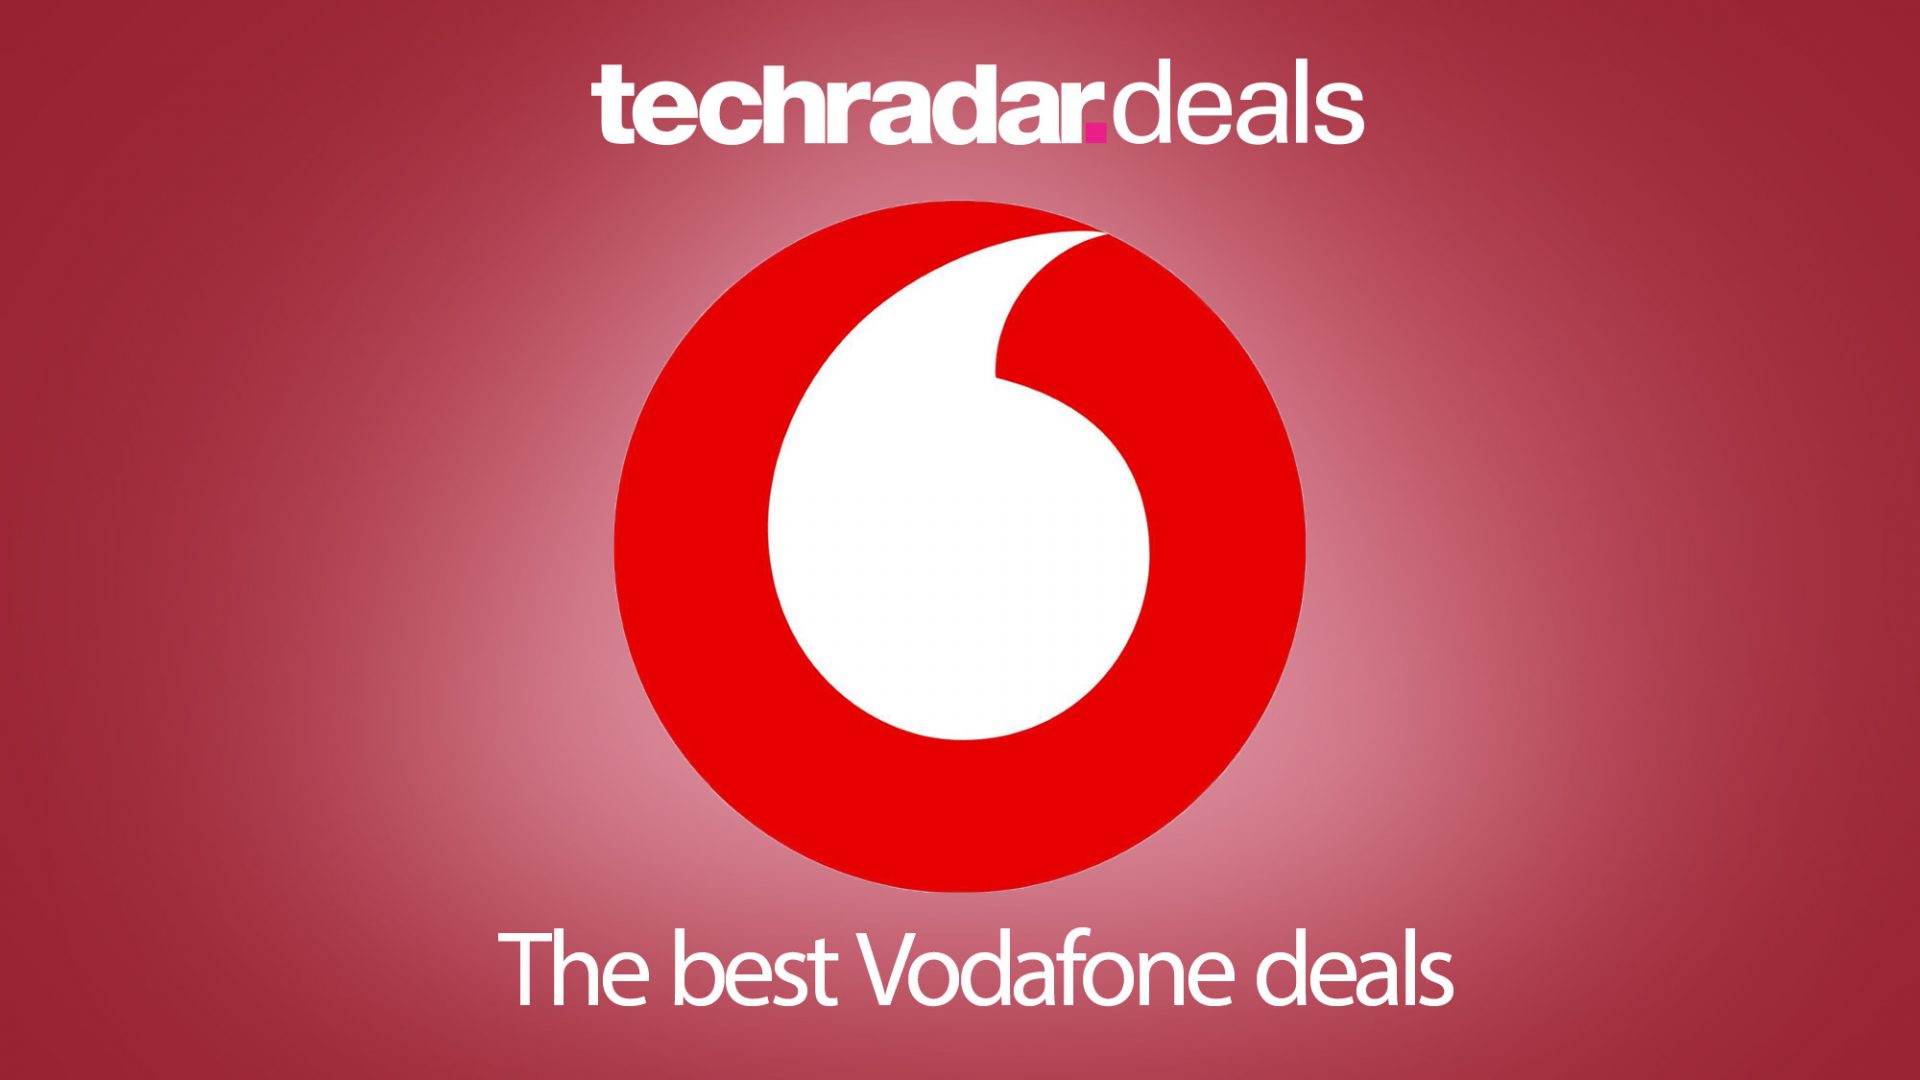 The wonderful Vodafone deals in June 2021